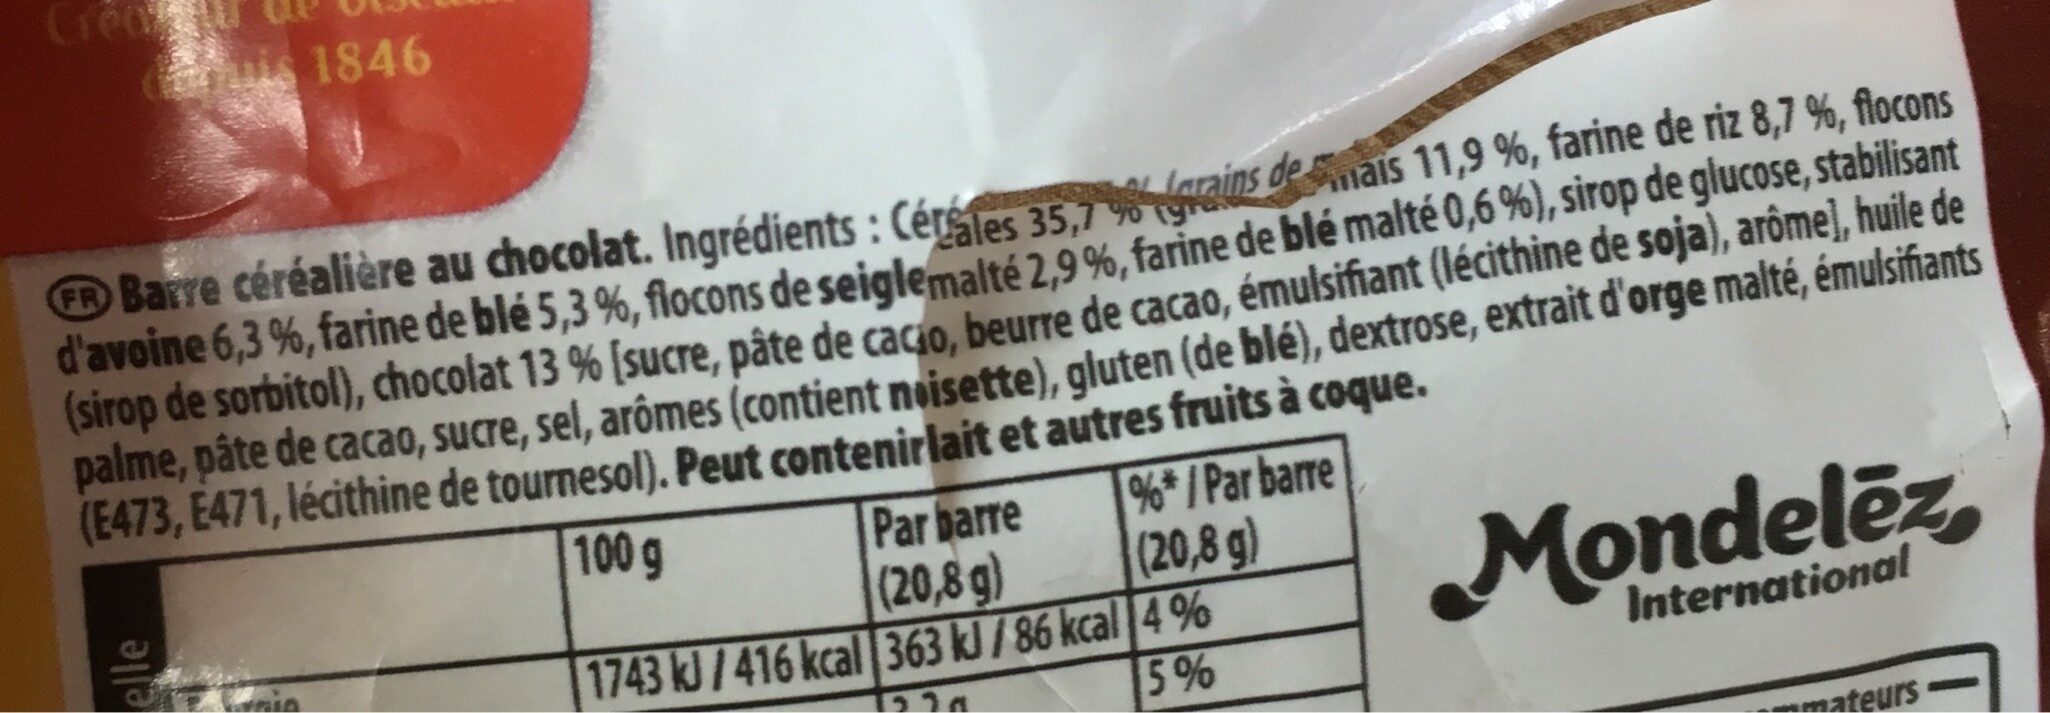 Barre céréales chocolat Grany - Ingredients - fr